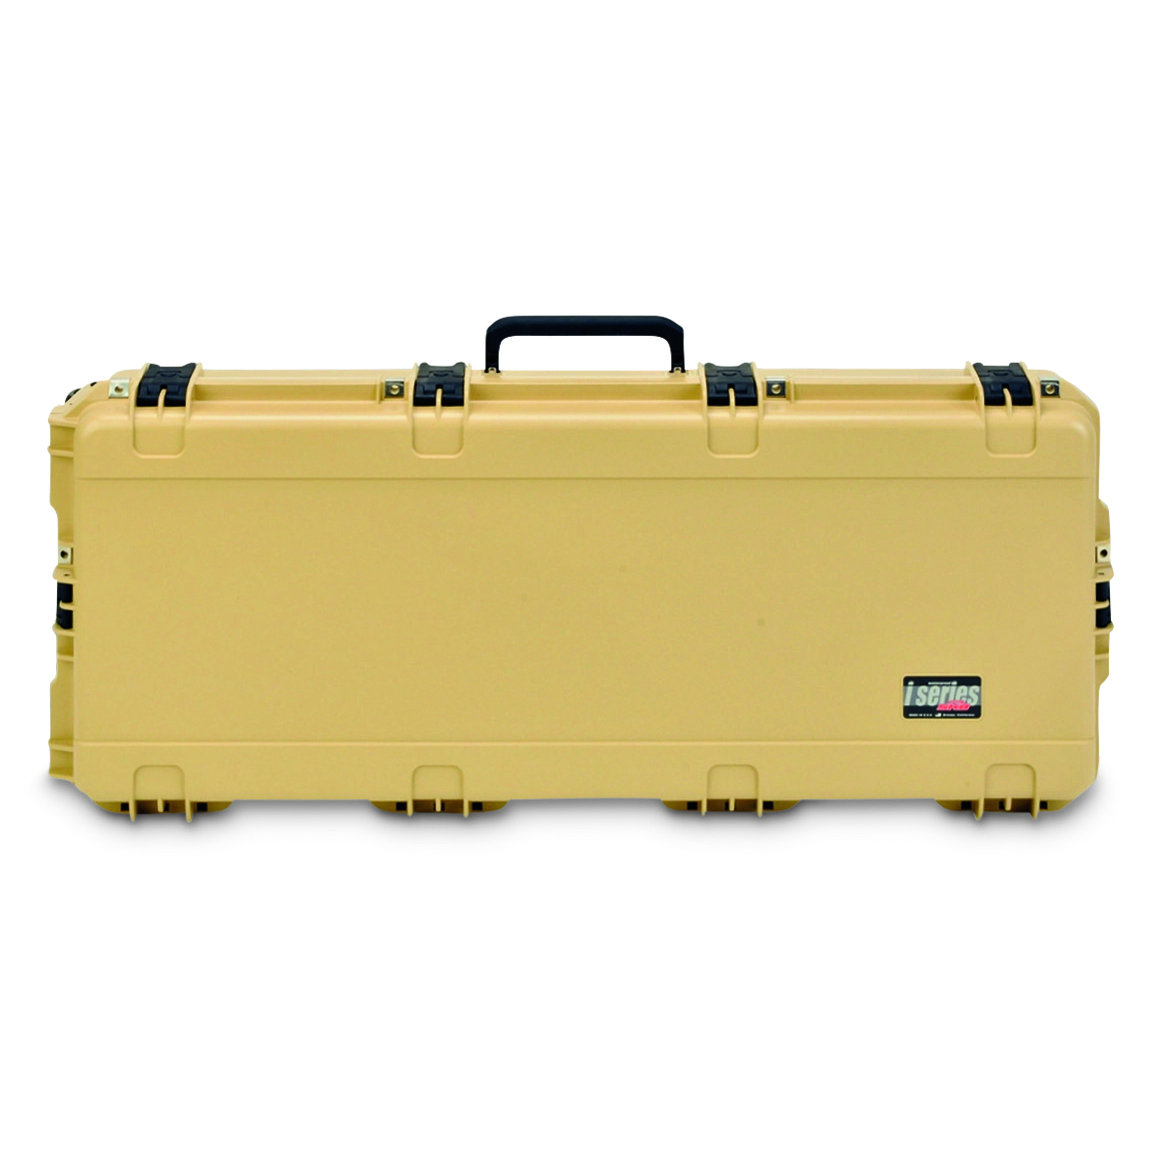 SKB iSeries 4217-7 Wheeled Hard Case, 45x19.75x8.25"h., Desert Tan